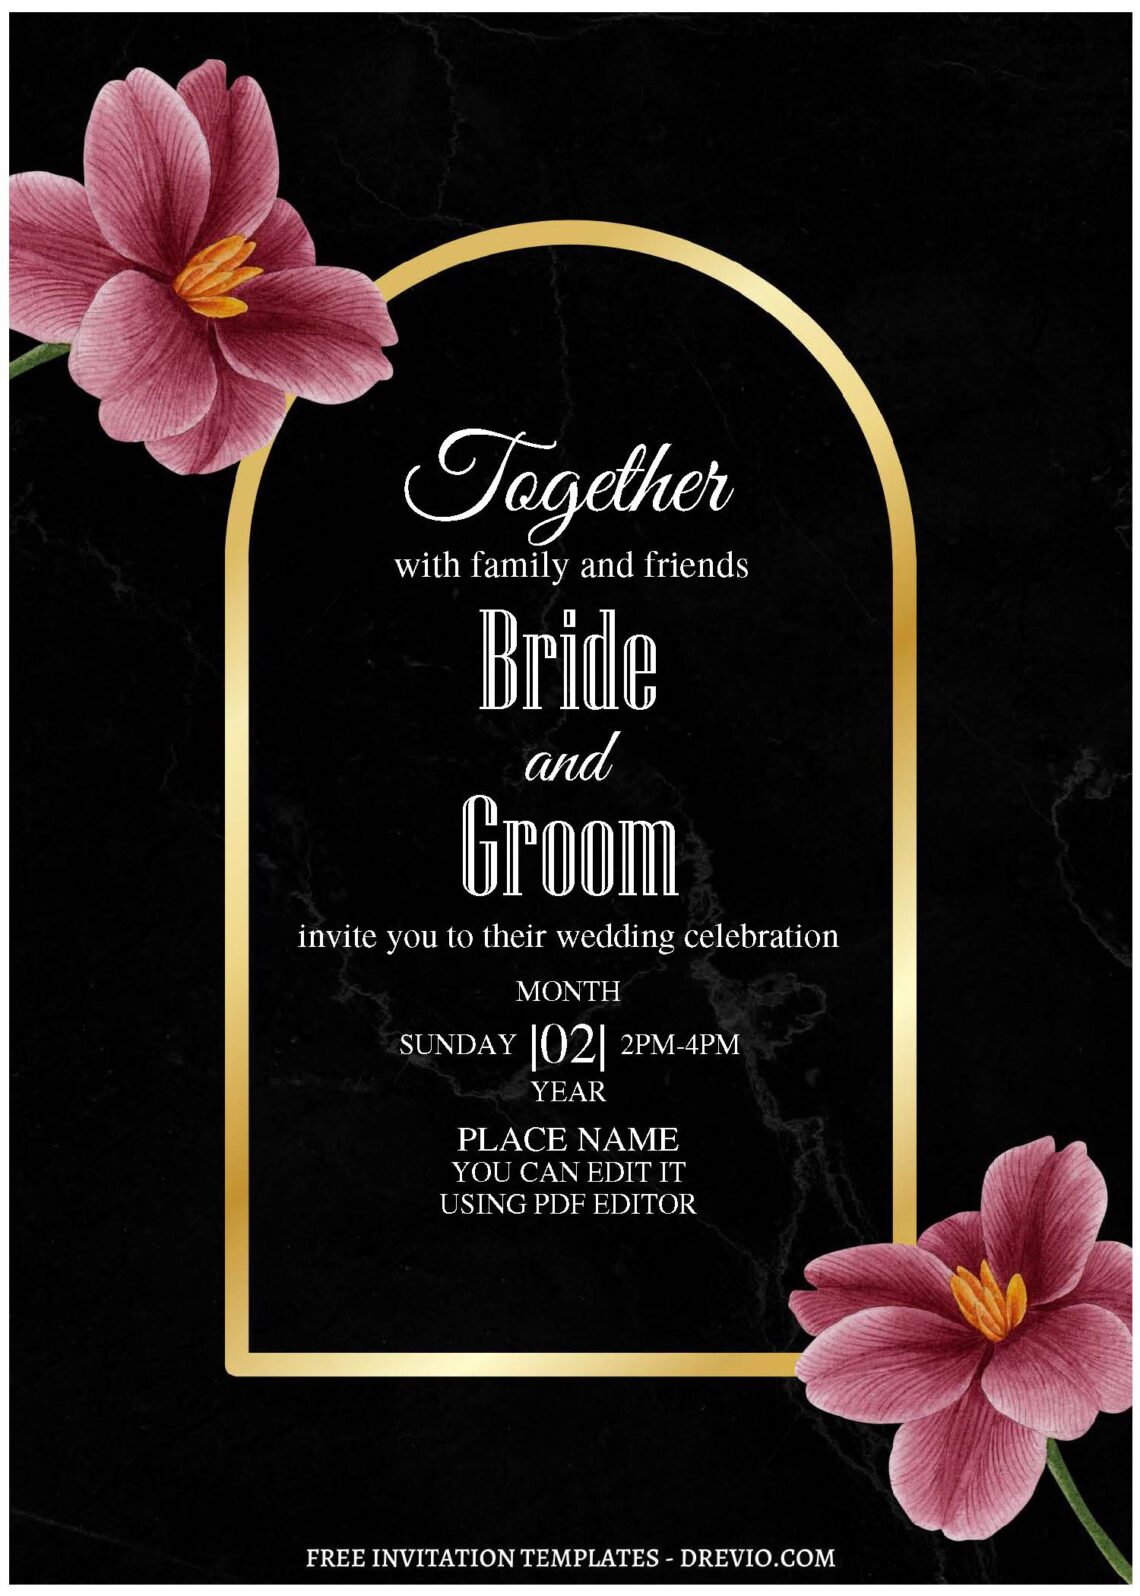 (Free Editable PDF) Granite Marble Floral Wedding Invitation Templates A